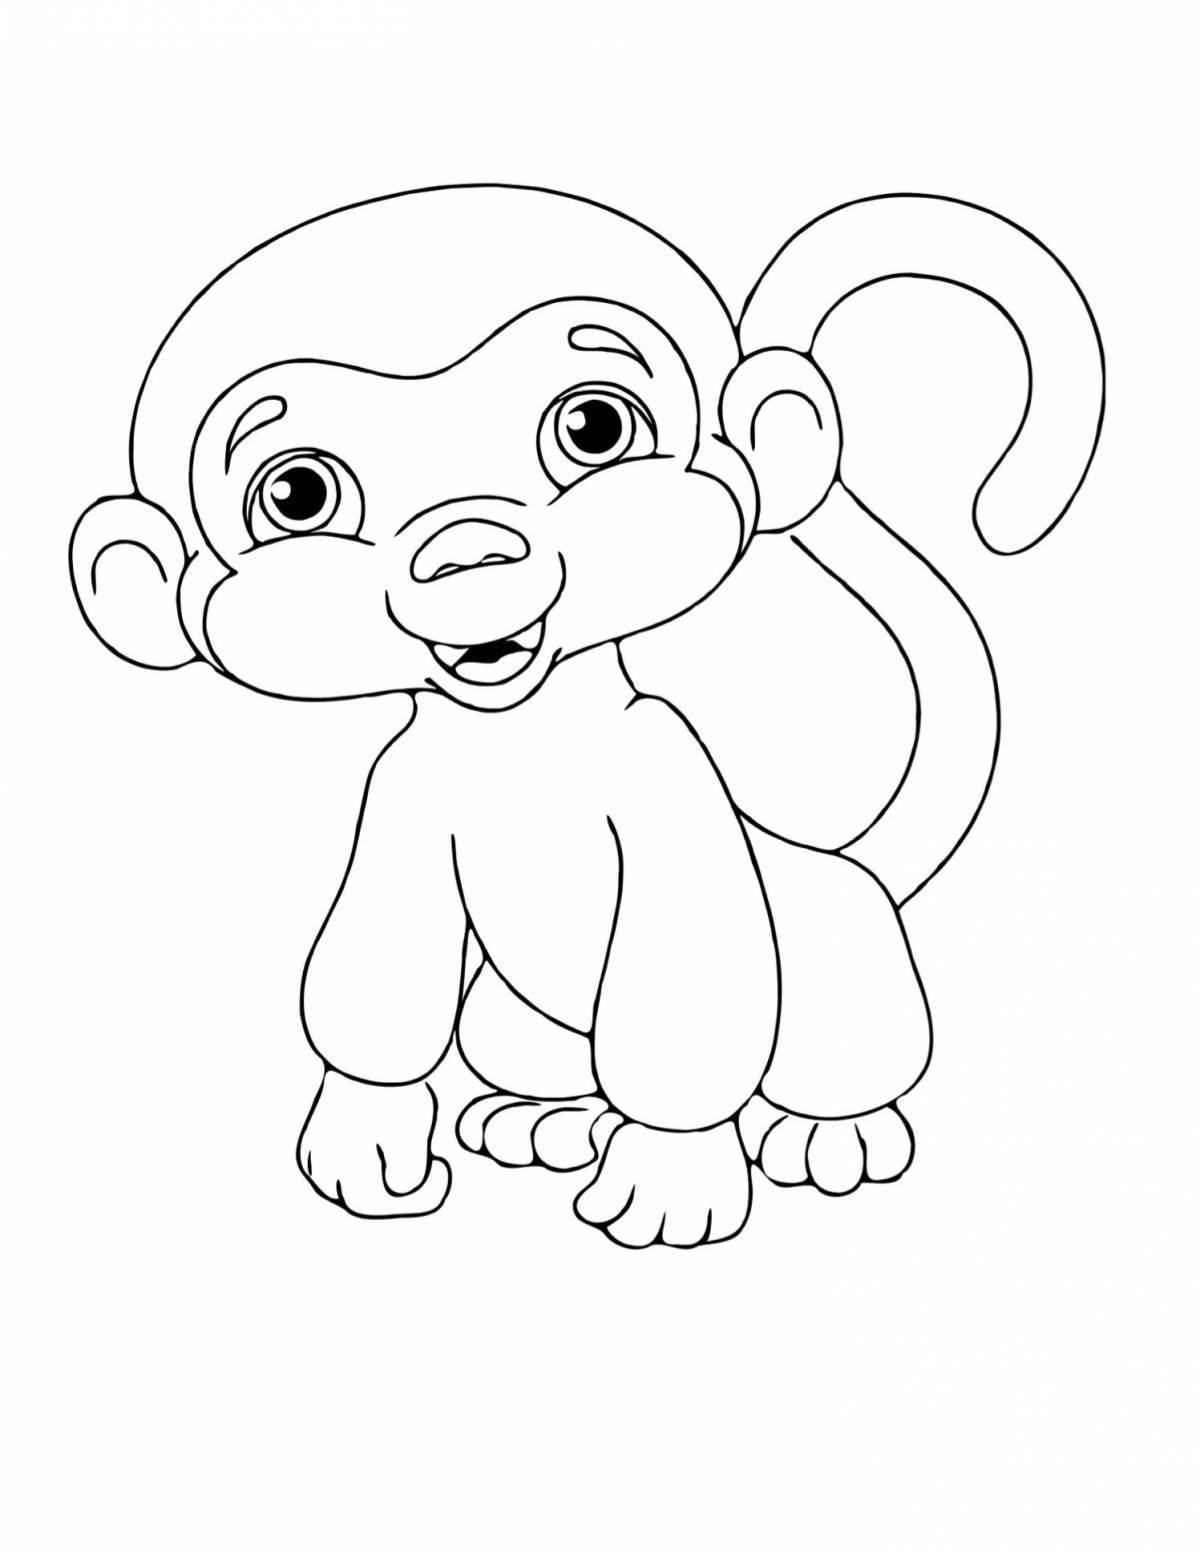 Coloring page adorable monkey zhitkov